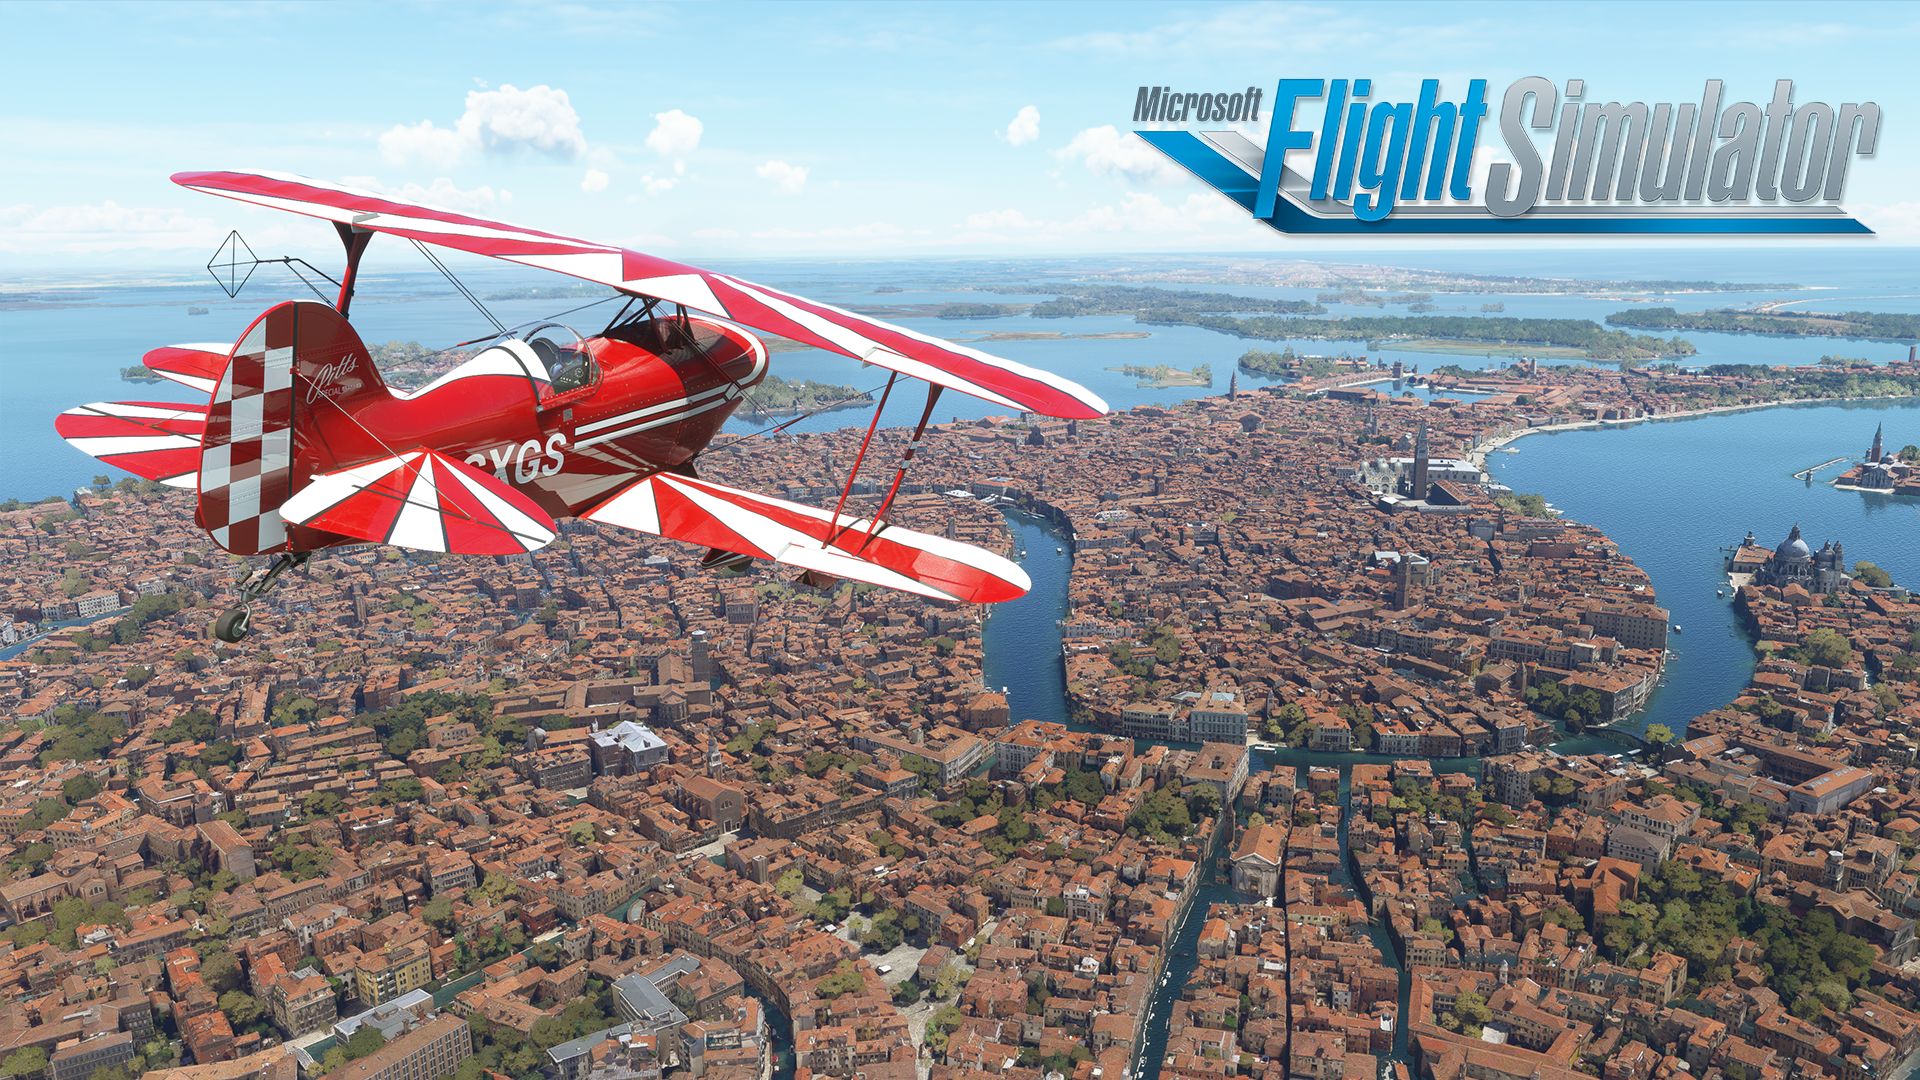 Microsoft Flight Simulator Releases World Update IX: Italy and Malta Today  - Xbox Wire